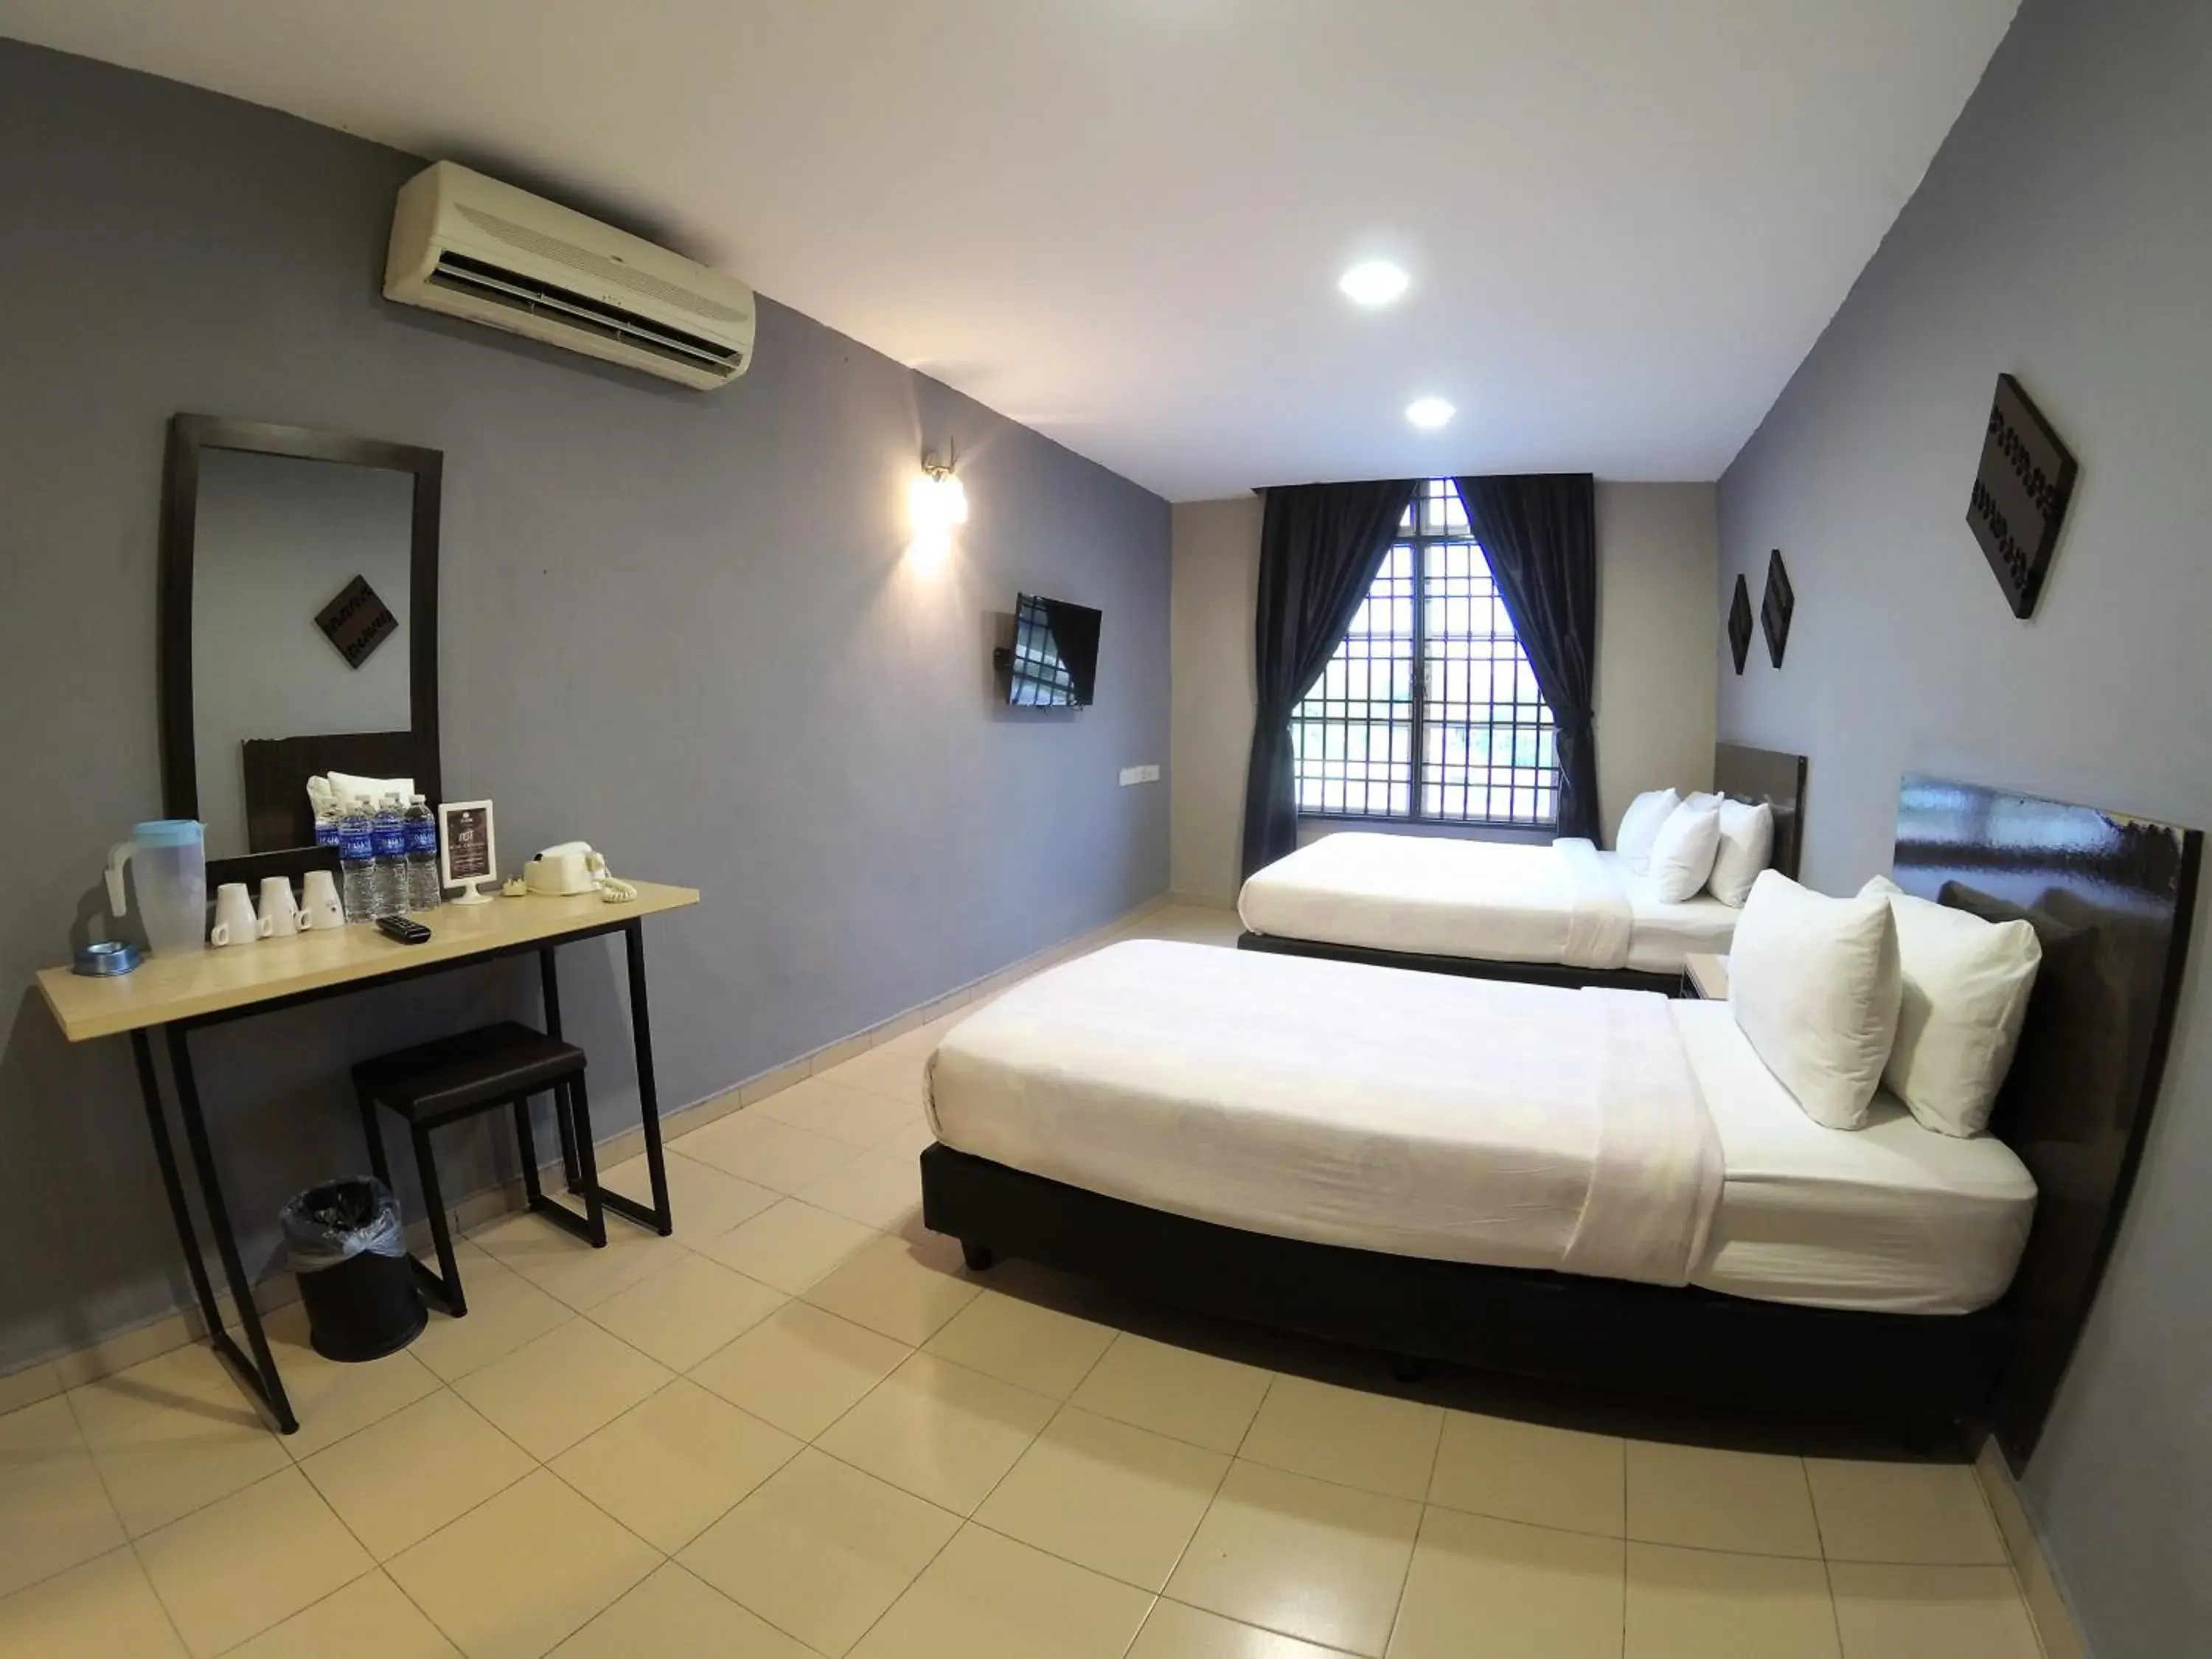 Bed in JV Hotel @ Simpang Ampat